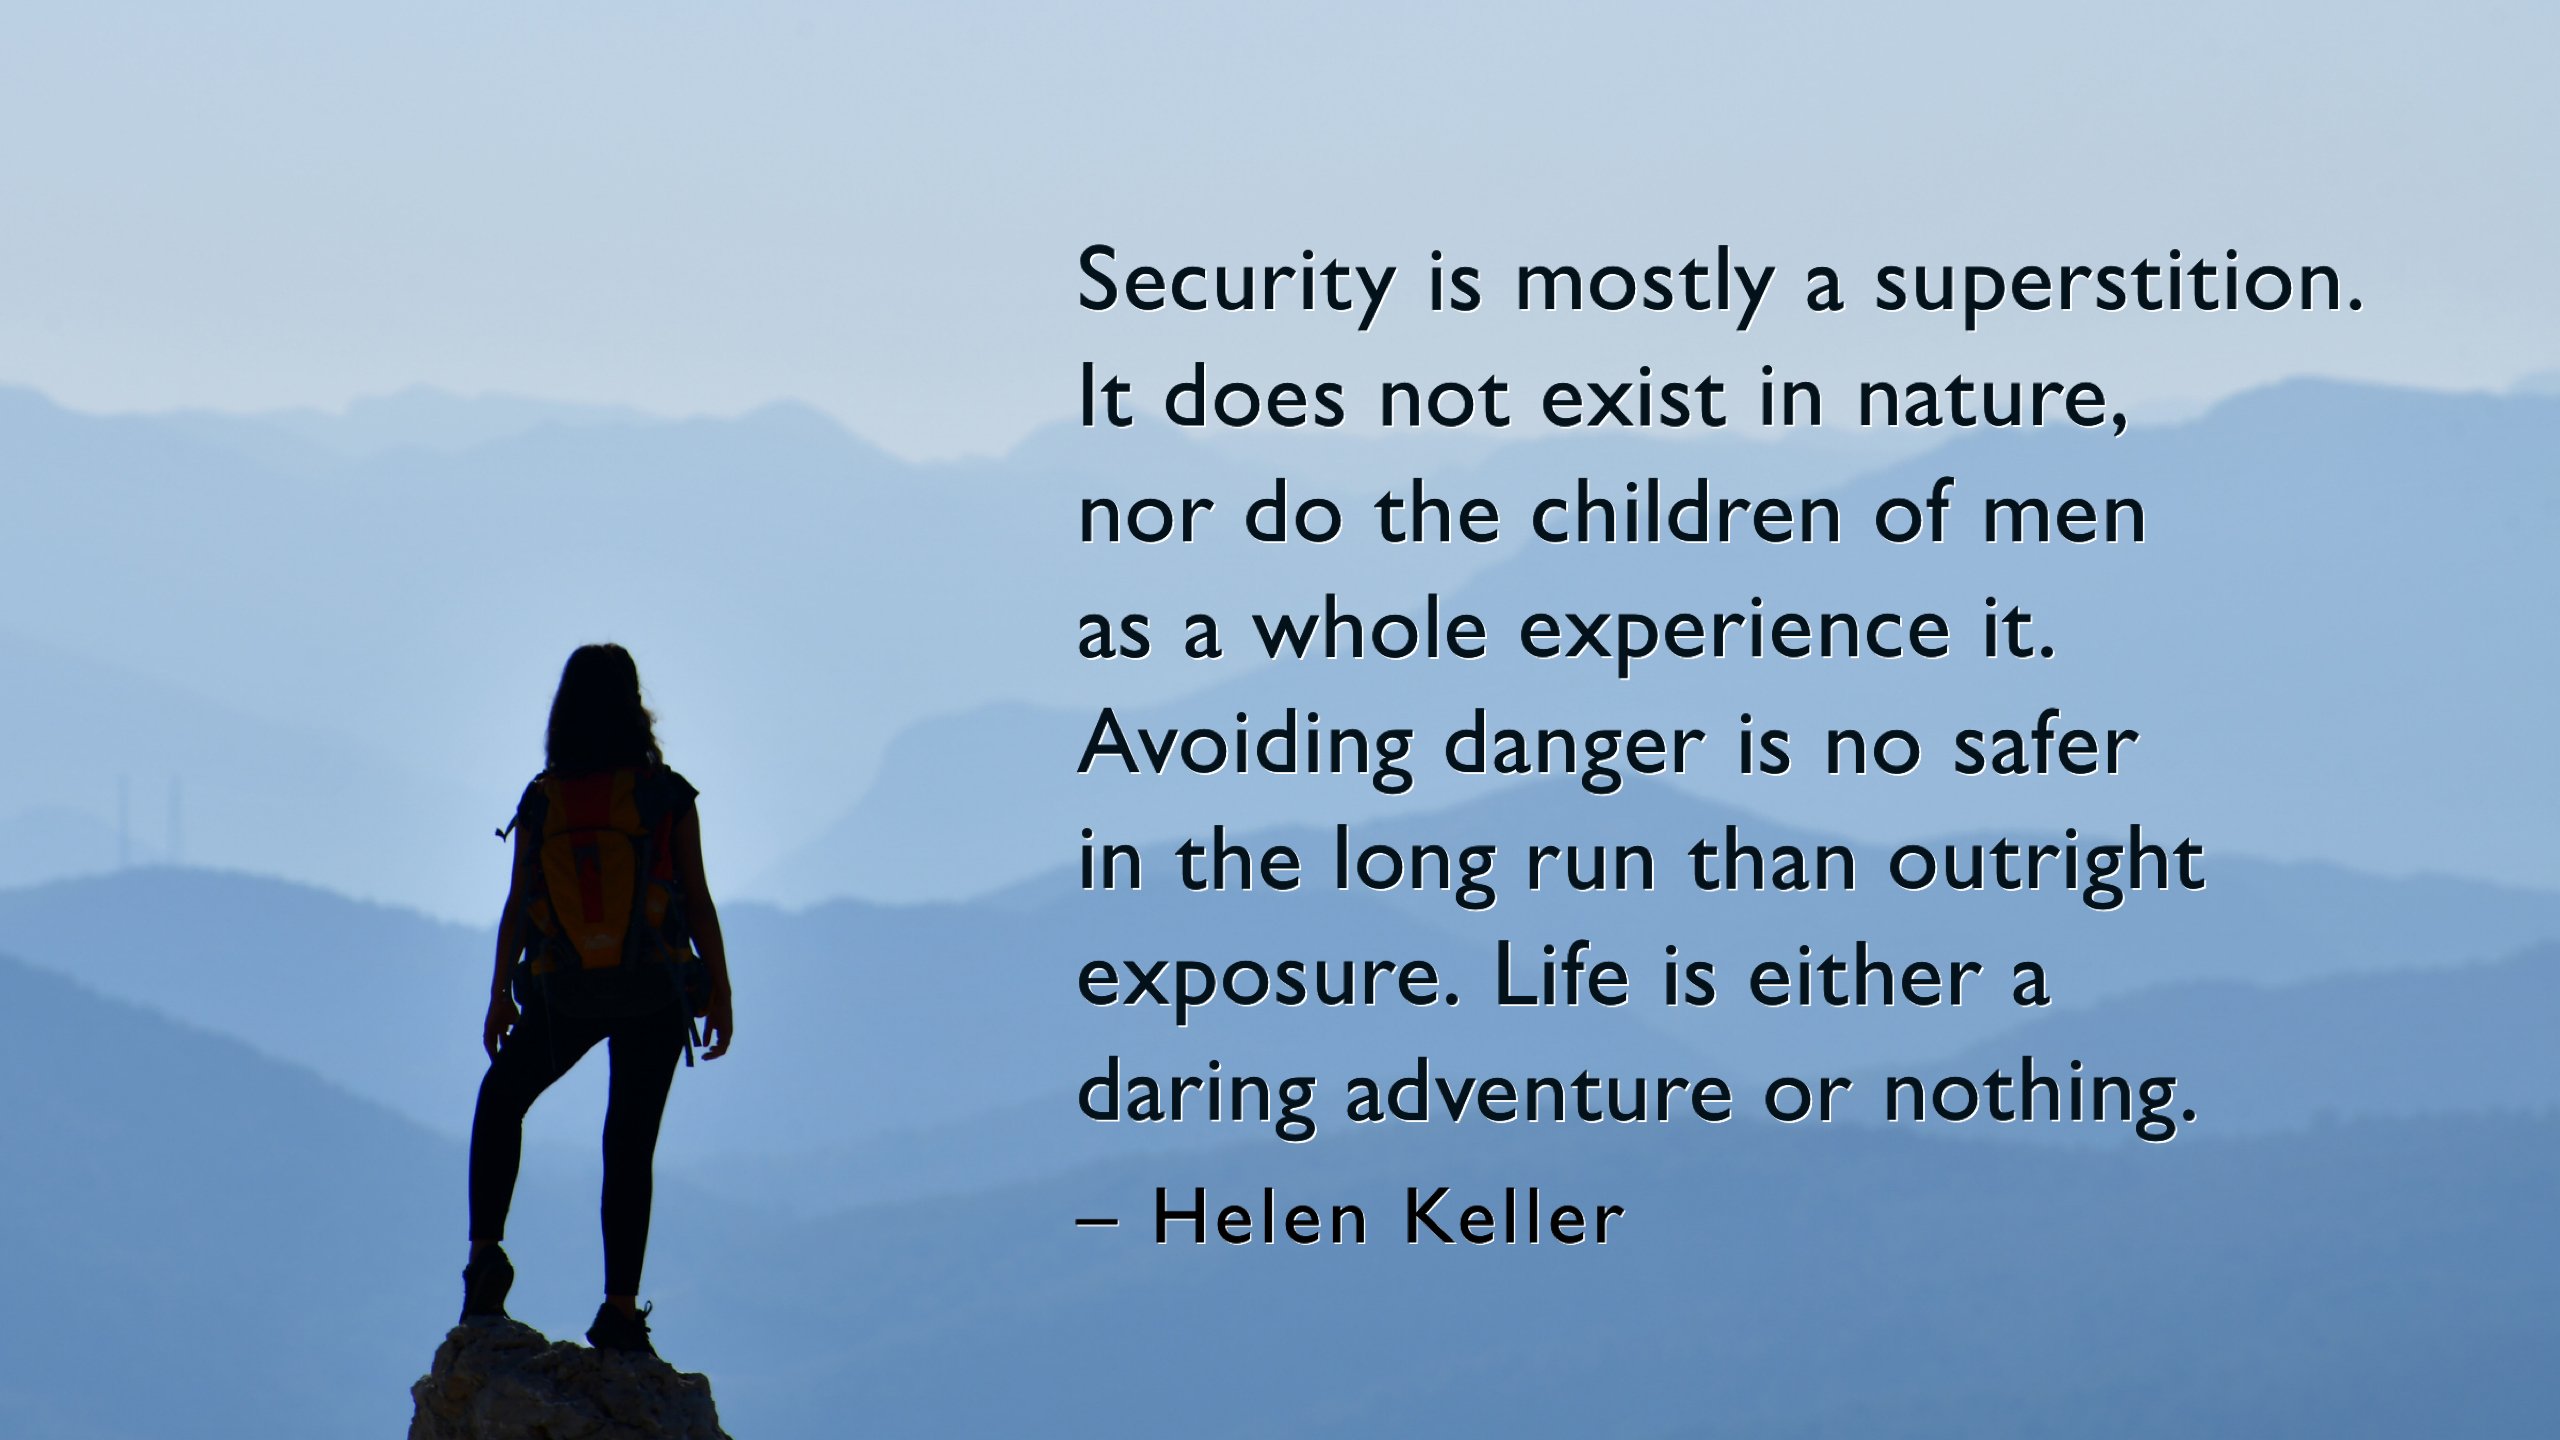 Quote by Helen Keller